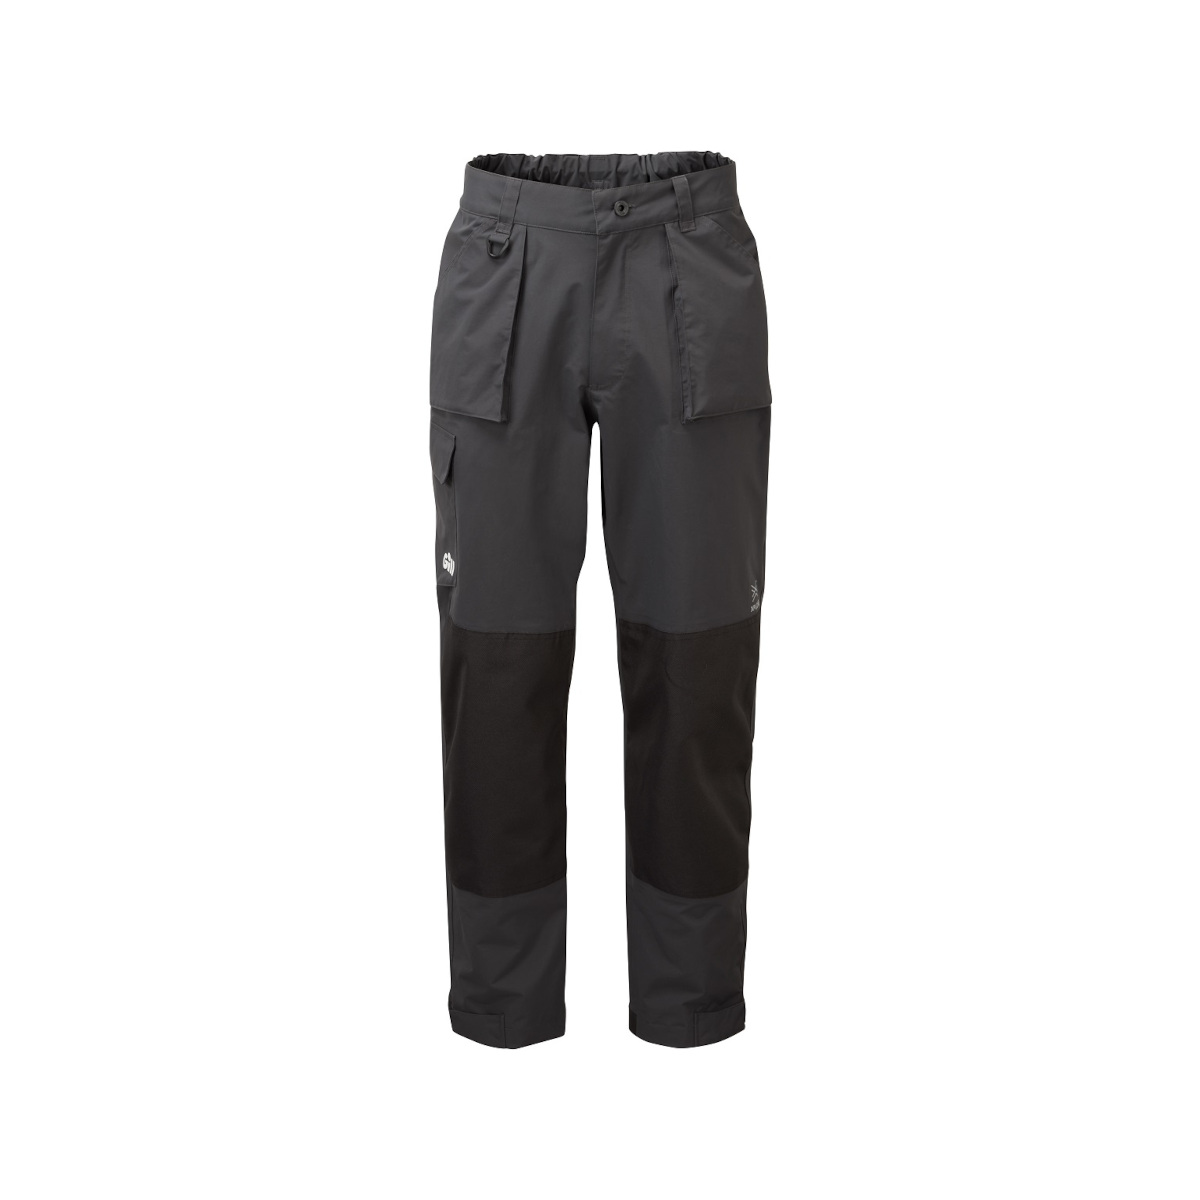 Gill OS32 Coastal pantalon de quart, homme - graphite, taille XXL